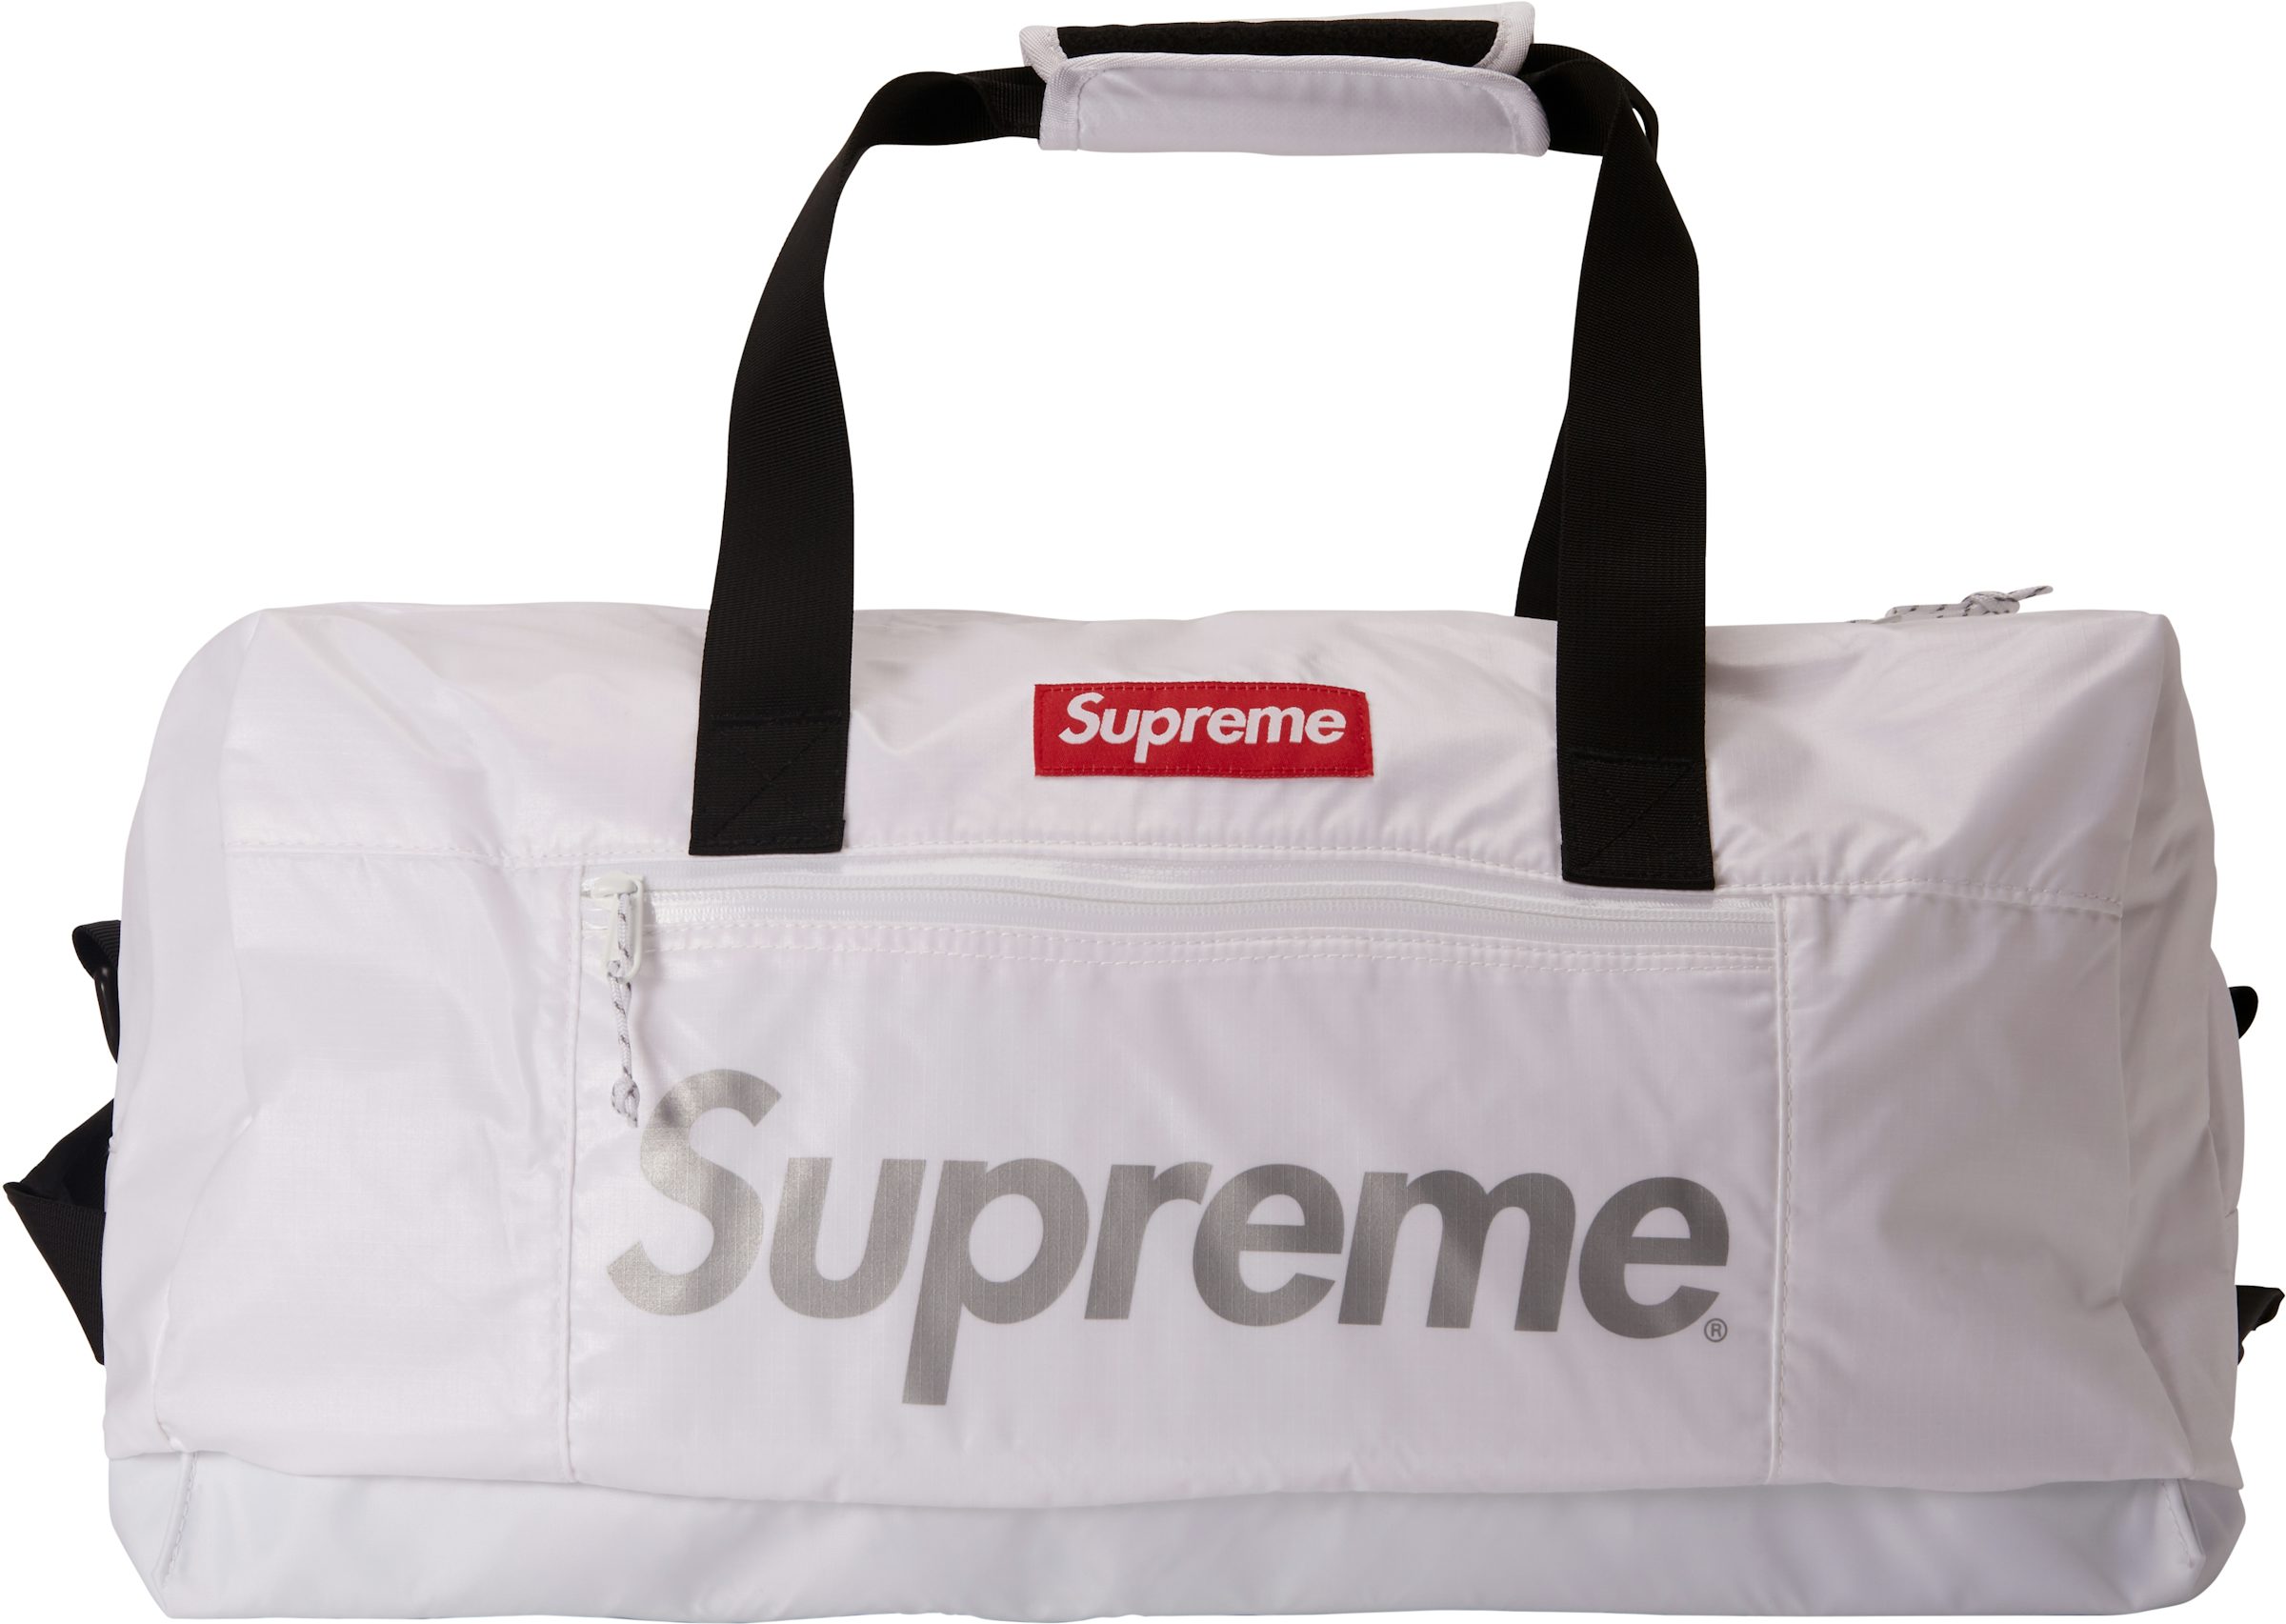 Supreme Duffle Bag 'Olive